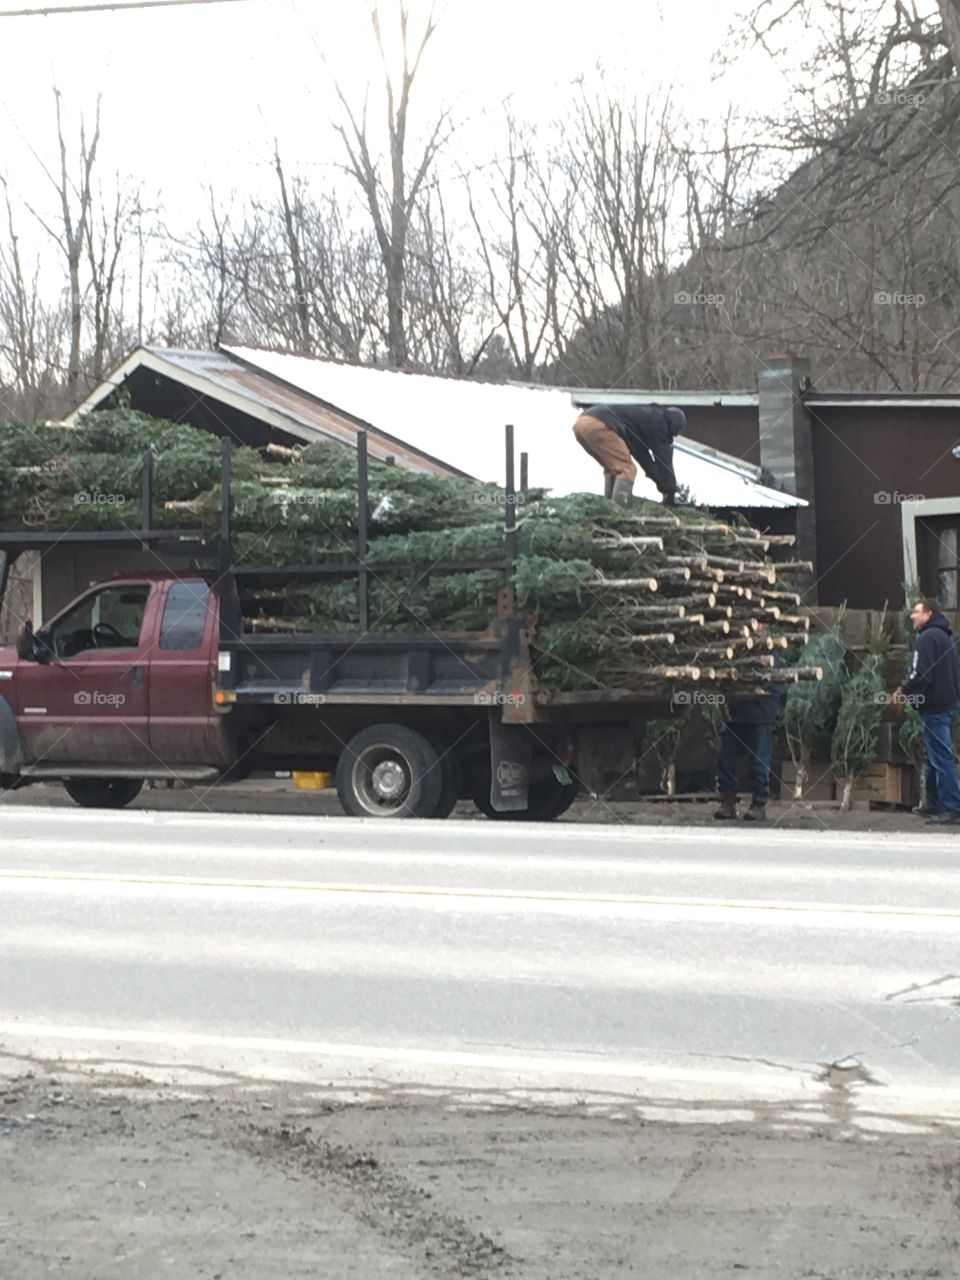 Unloading Christmas trees